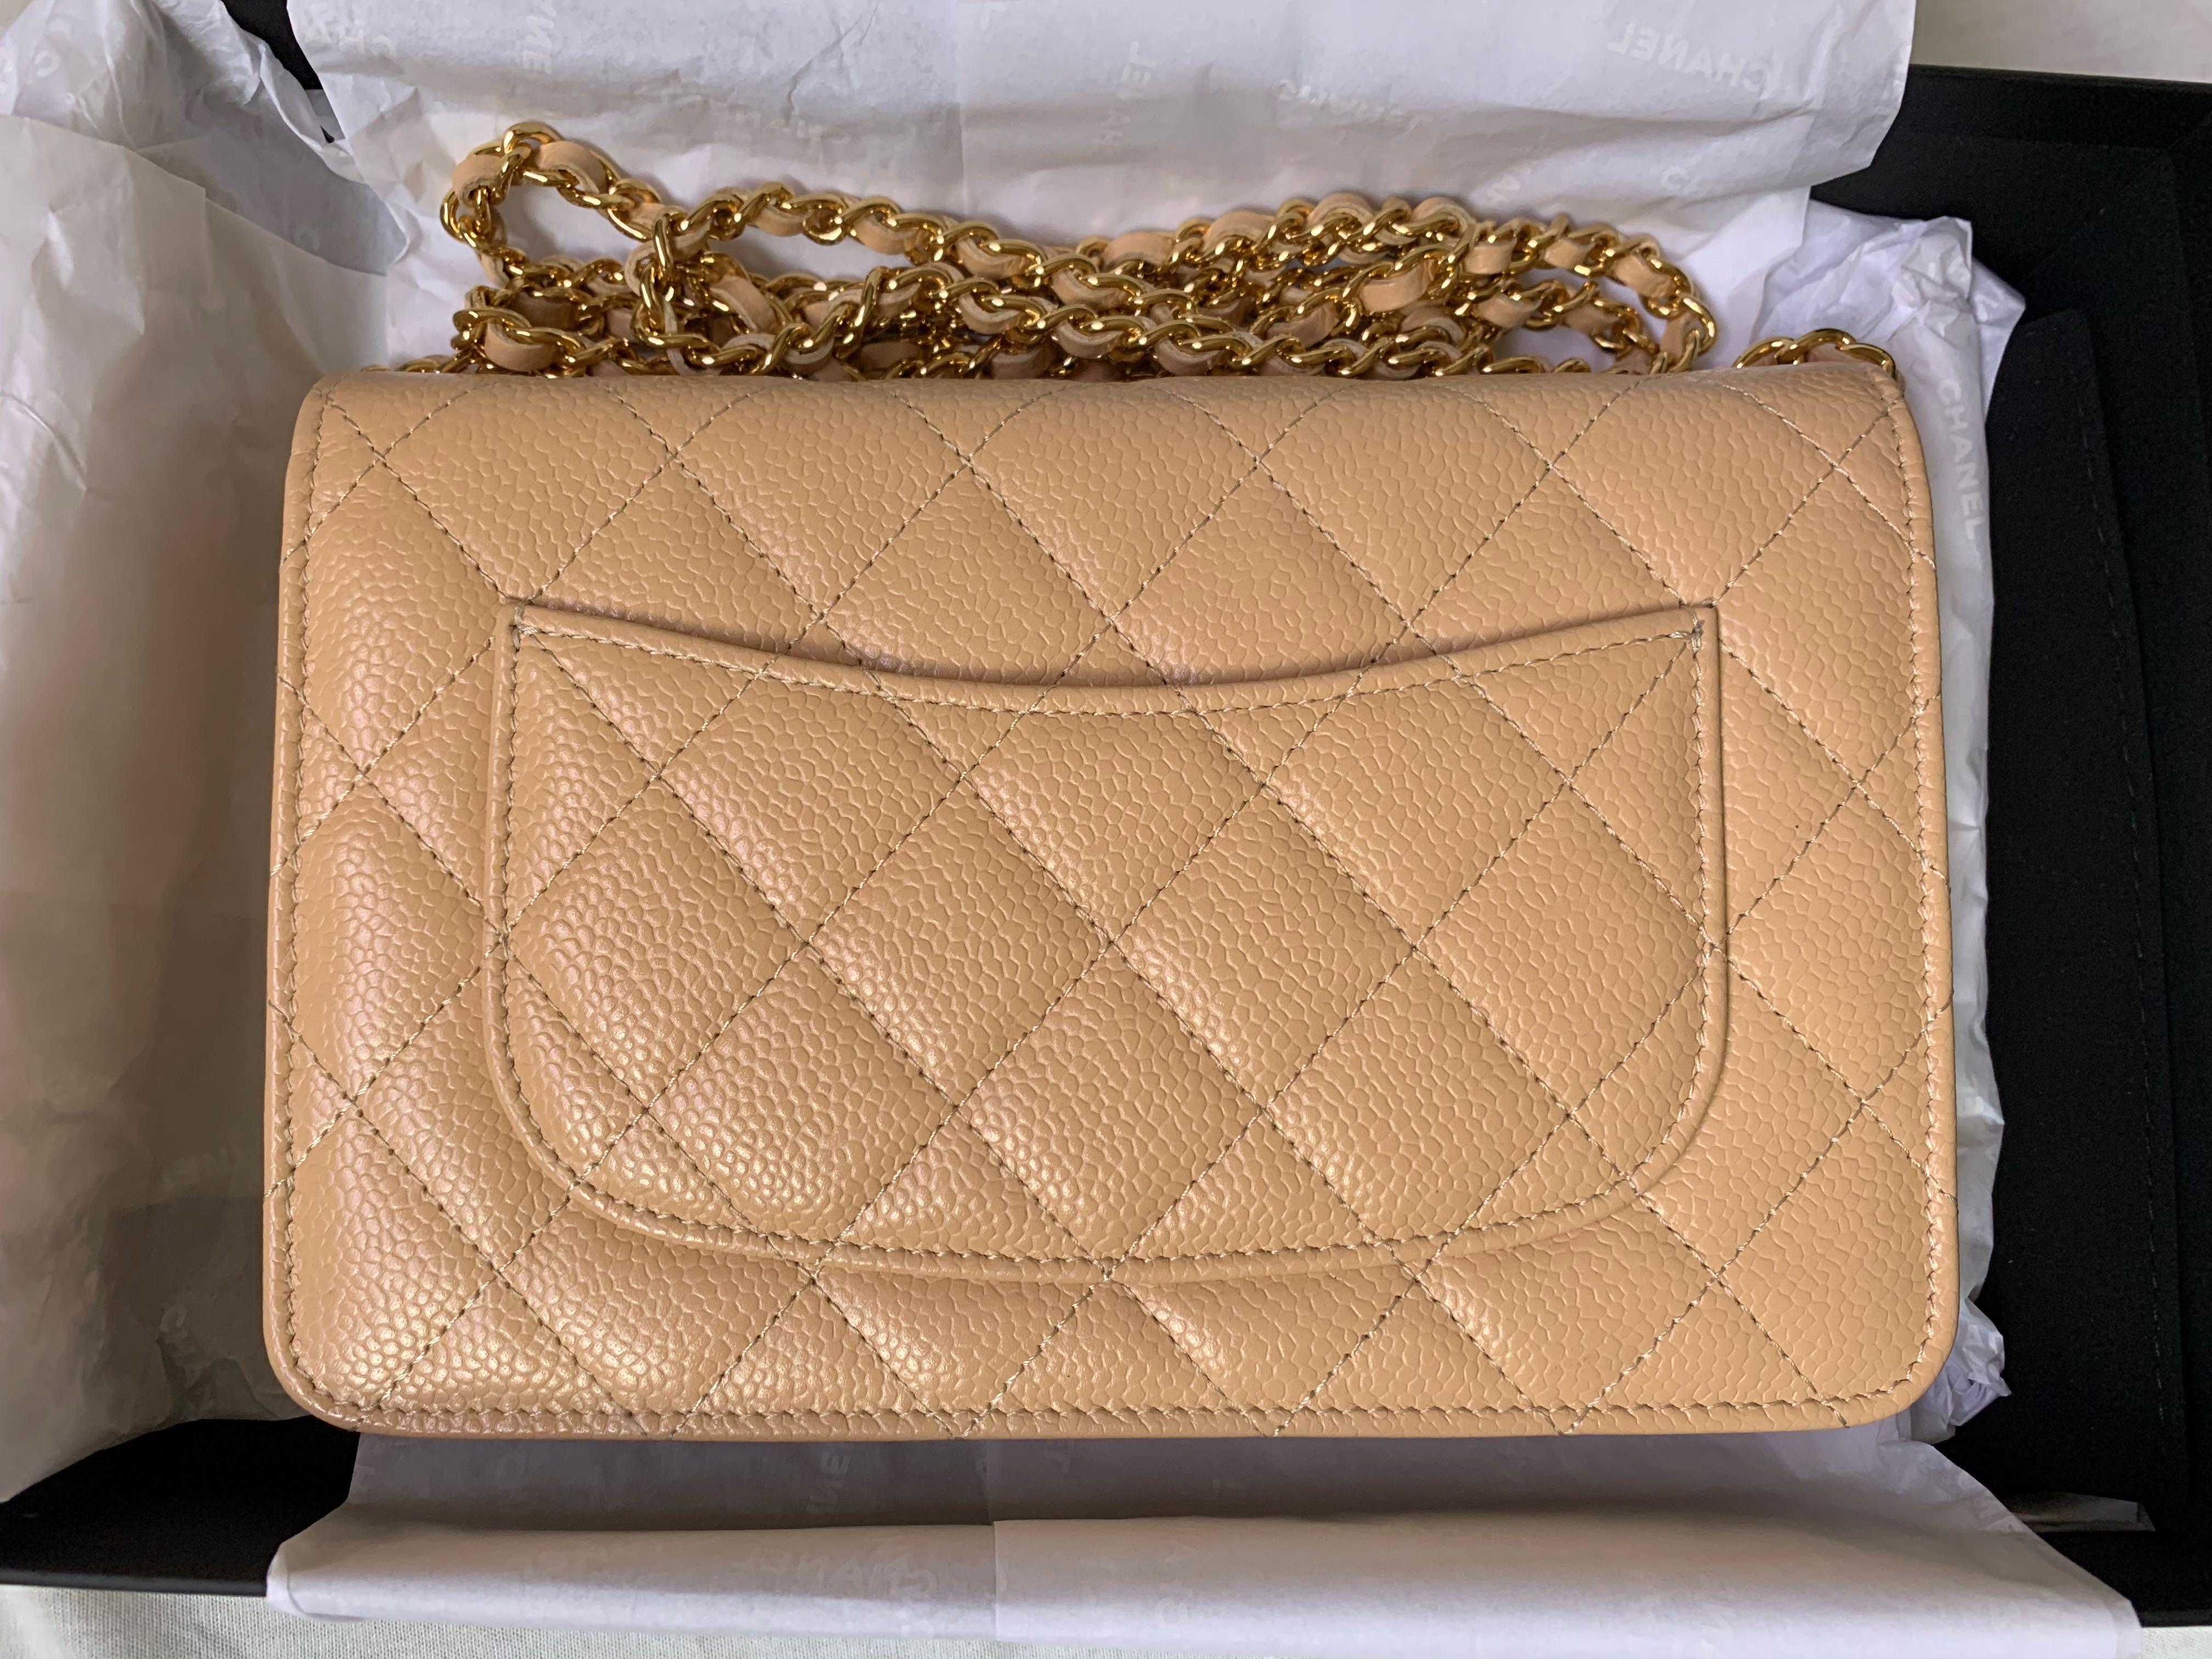 NIB 100%AUTH CHANEL 22C Beige Clair Caviar Leather Classic Wallet On Chain  WOC